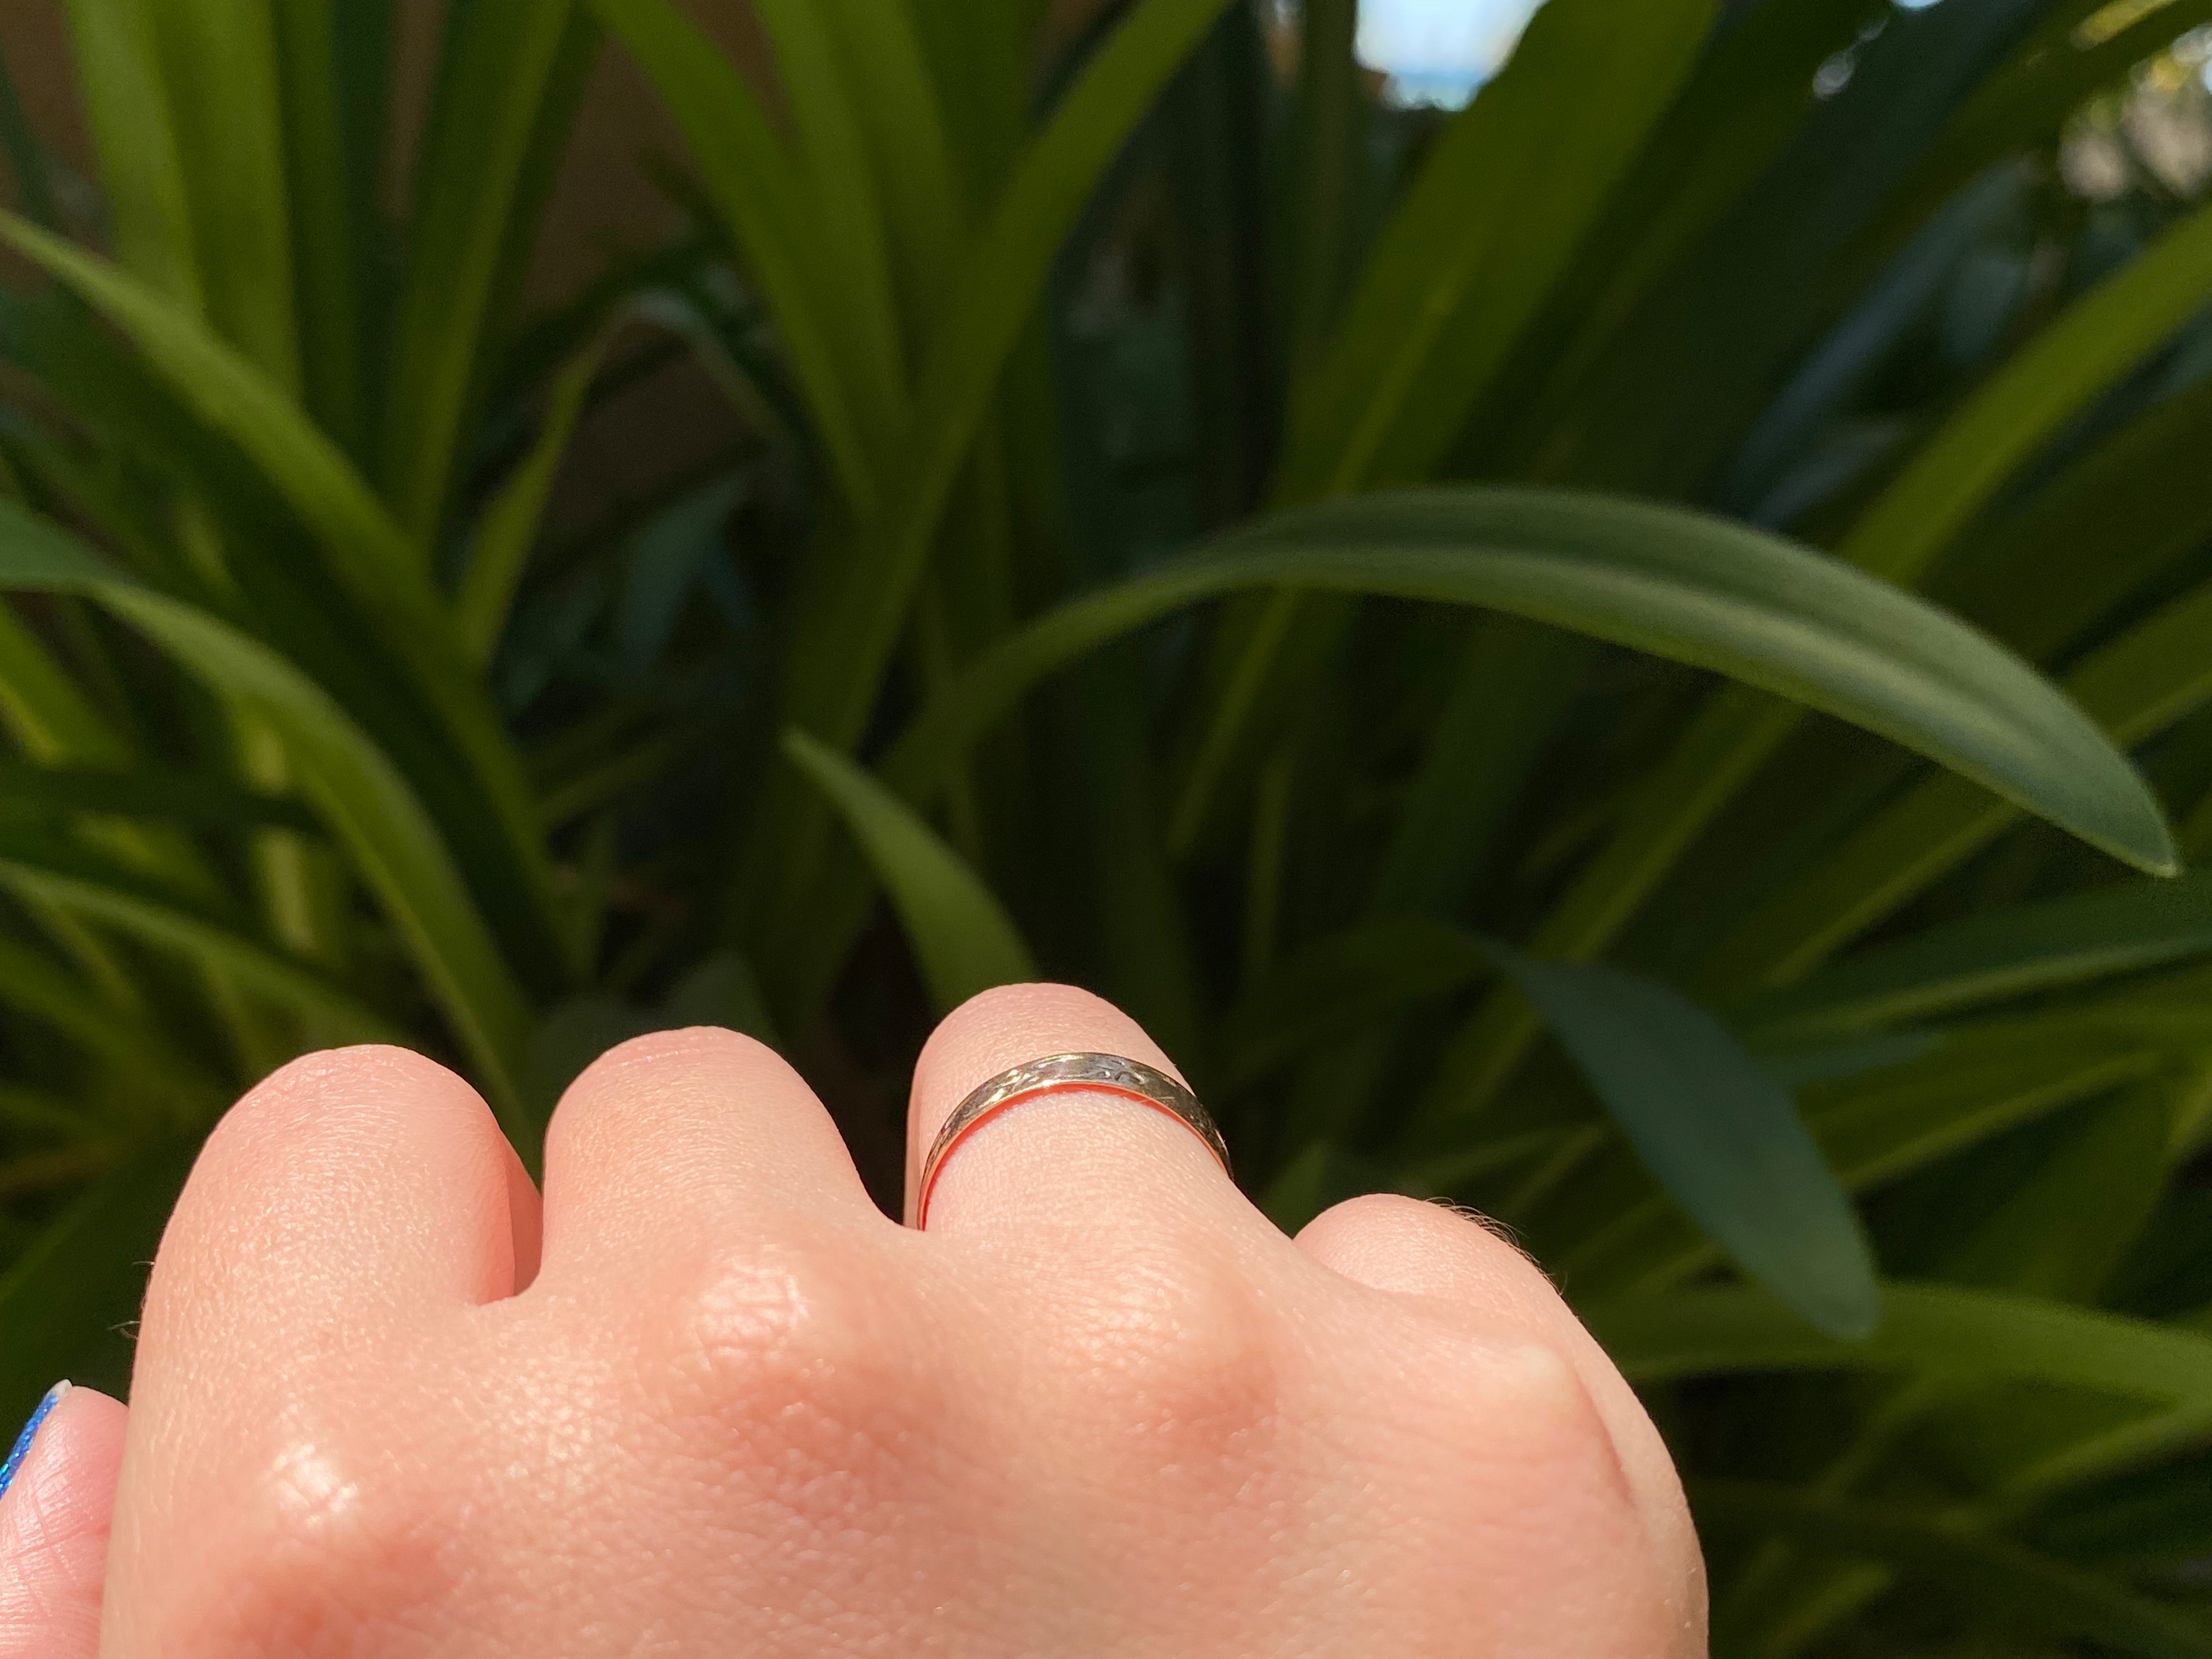 Victorian Wedding Ring, Size 7, 10K